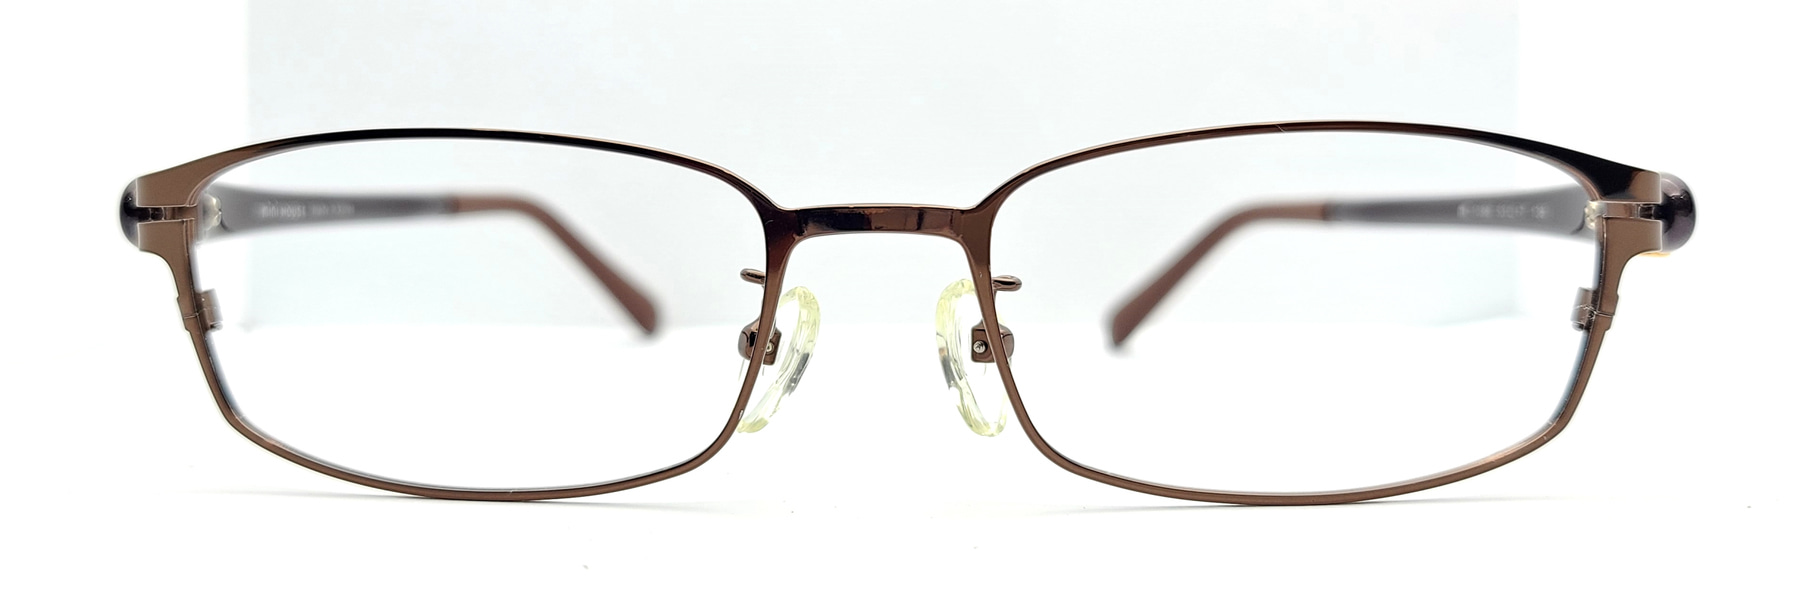 MINIHOUSE M-1086, Korean glasses, sunglasses, eyeglasses, glasses